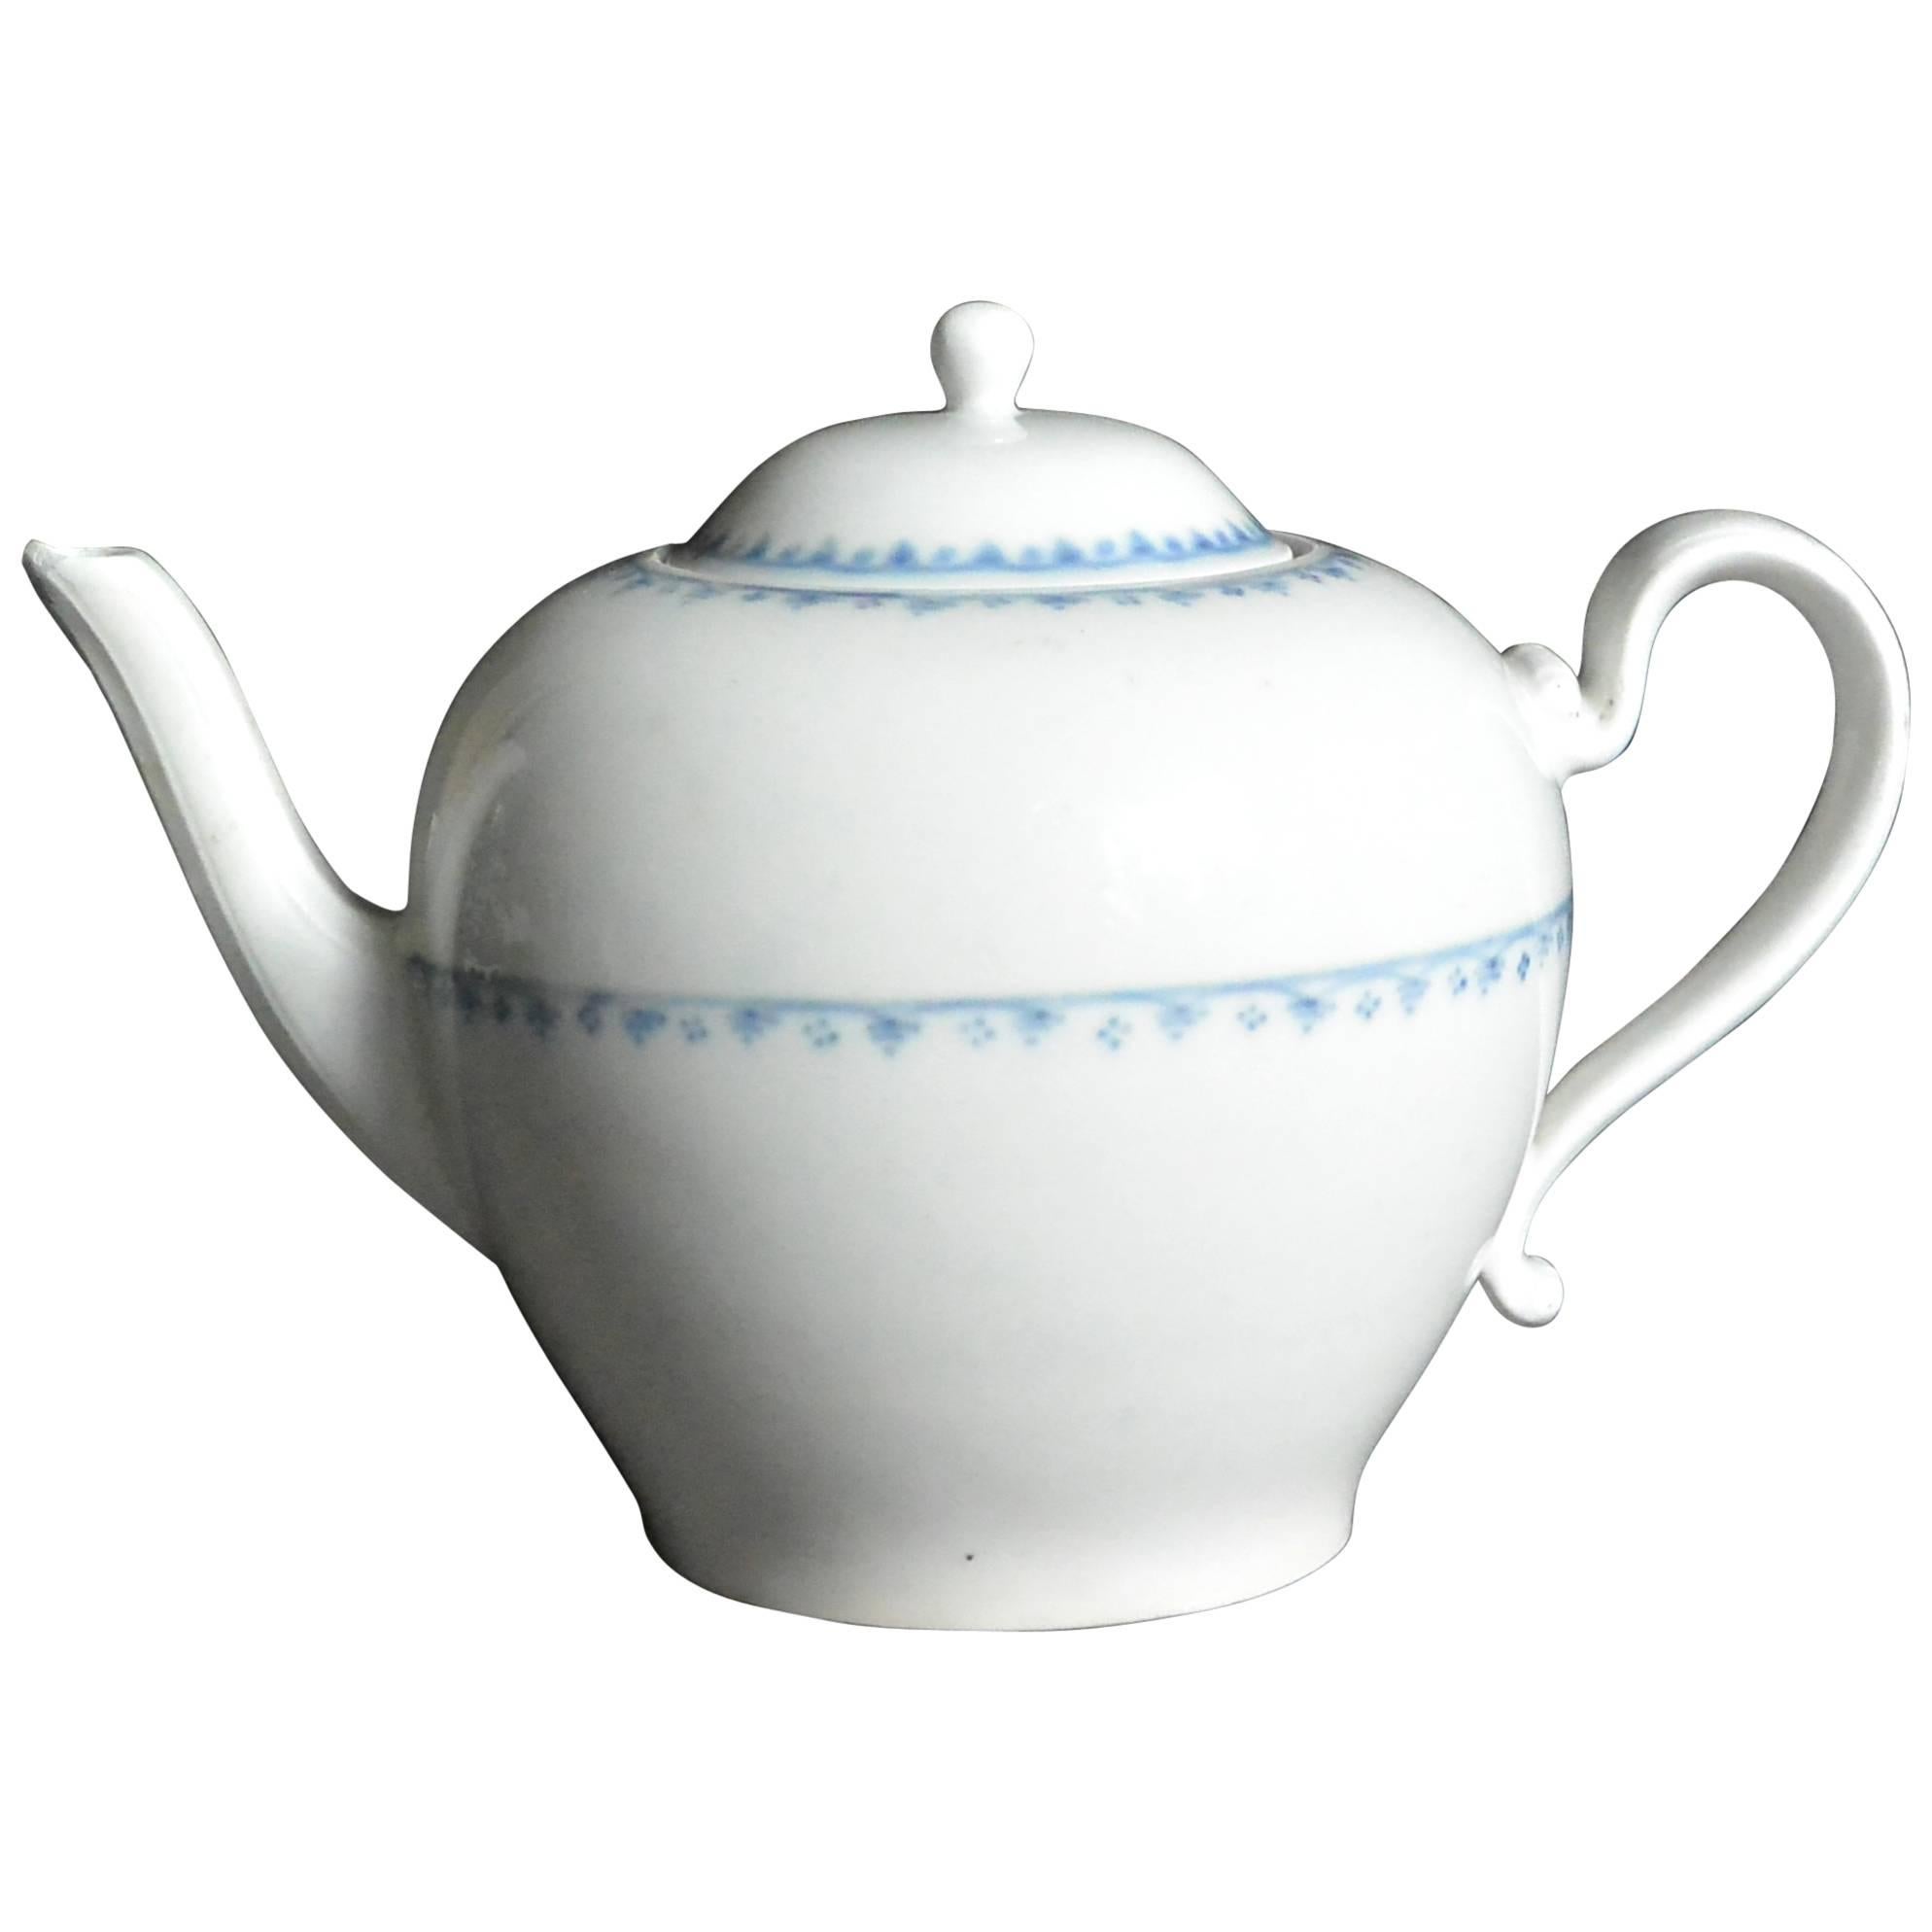 Blue and White Vienna Porcelain Teapot